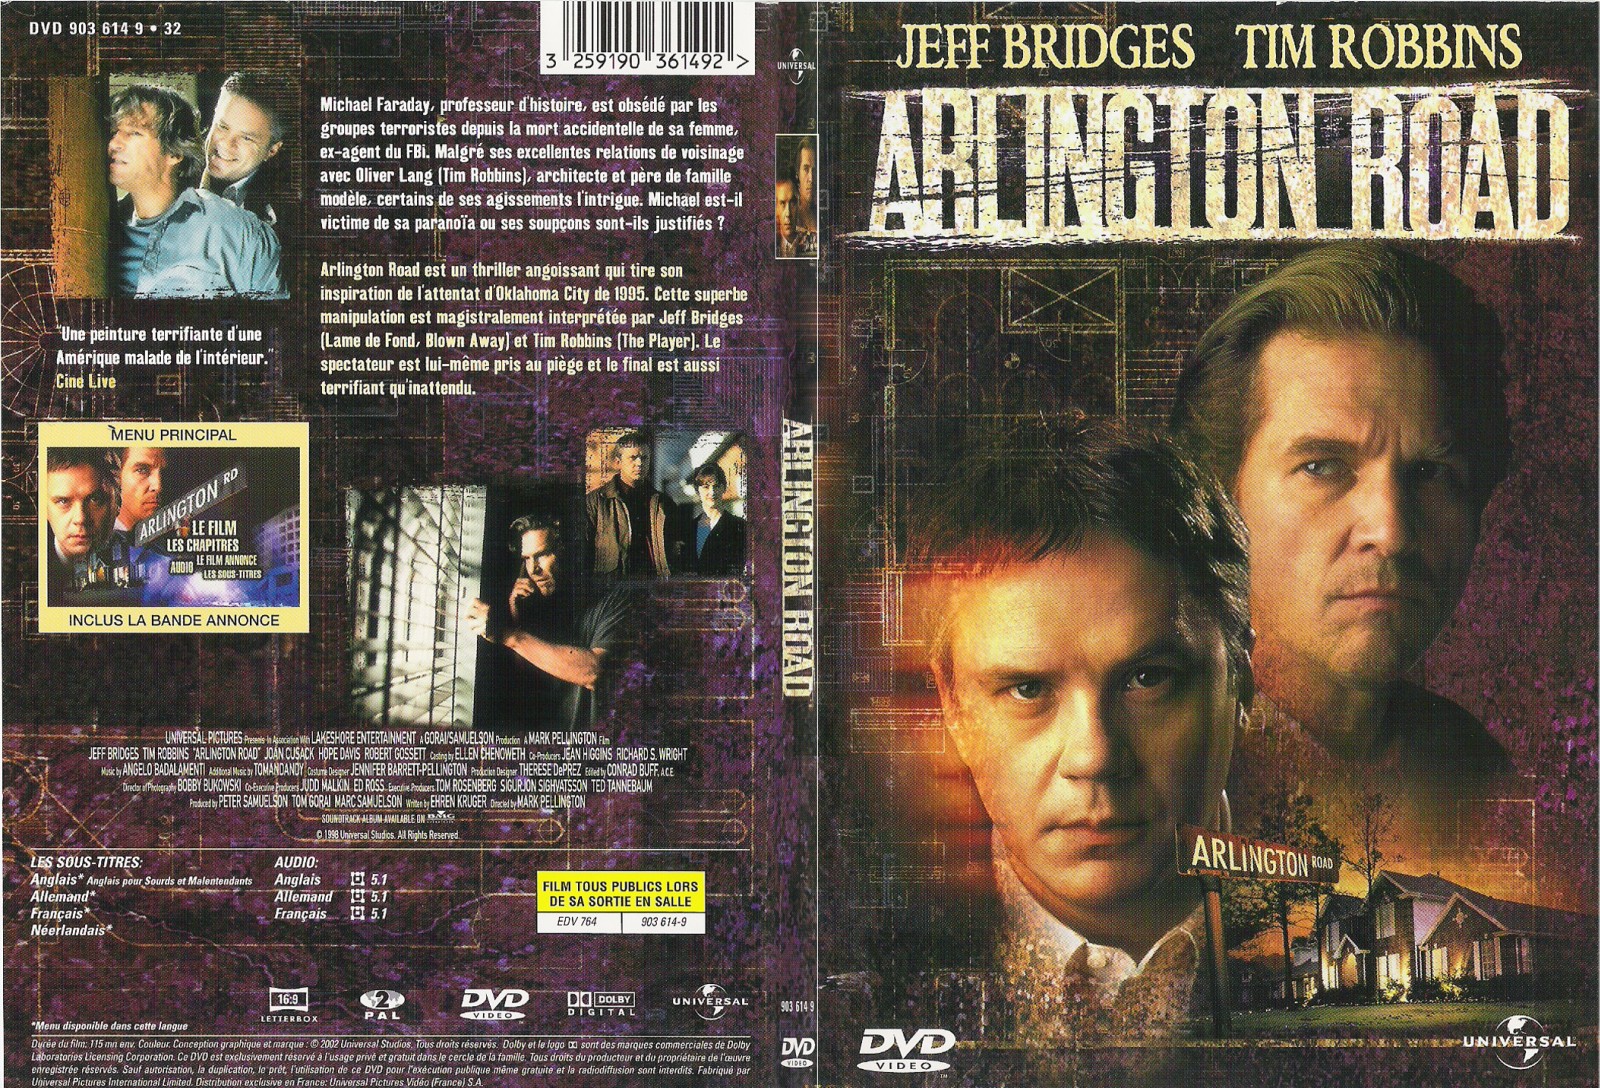 Jaquette DVD Arlington road - SLIM